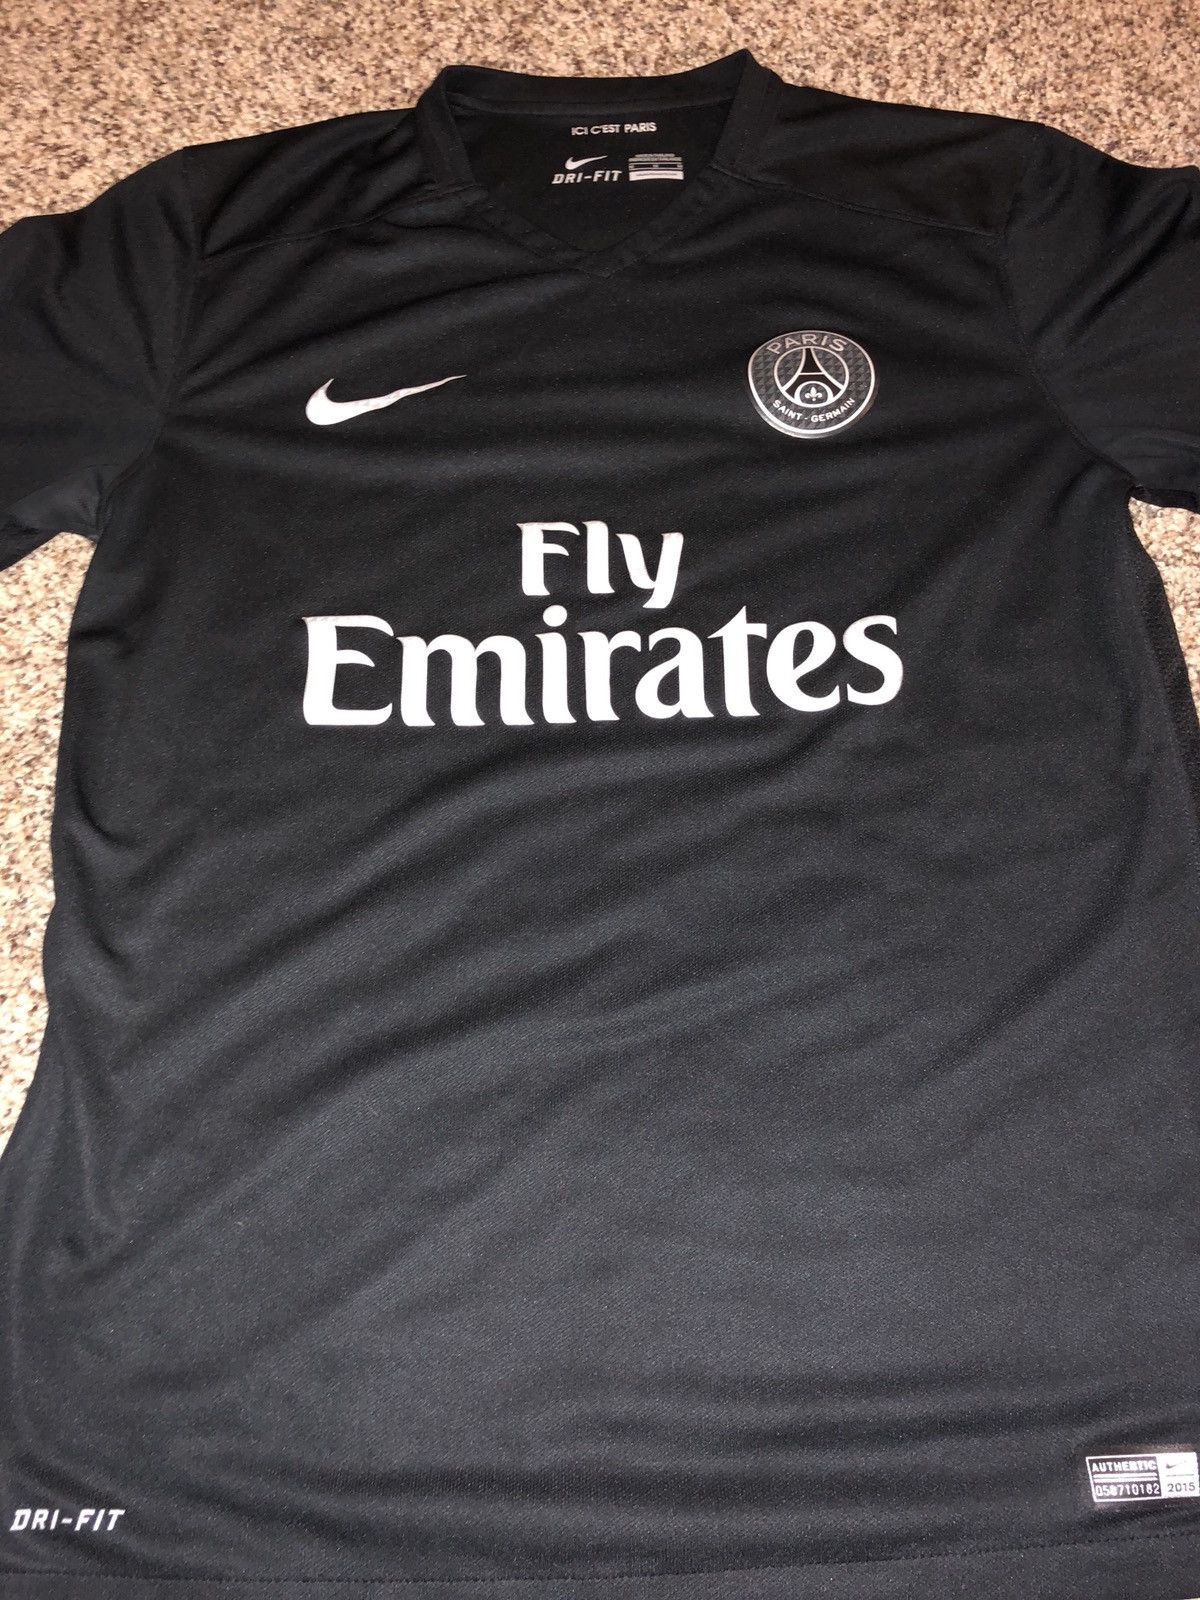 Nike PSG Fly Emirates jersey (black) | Grailed